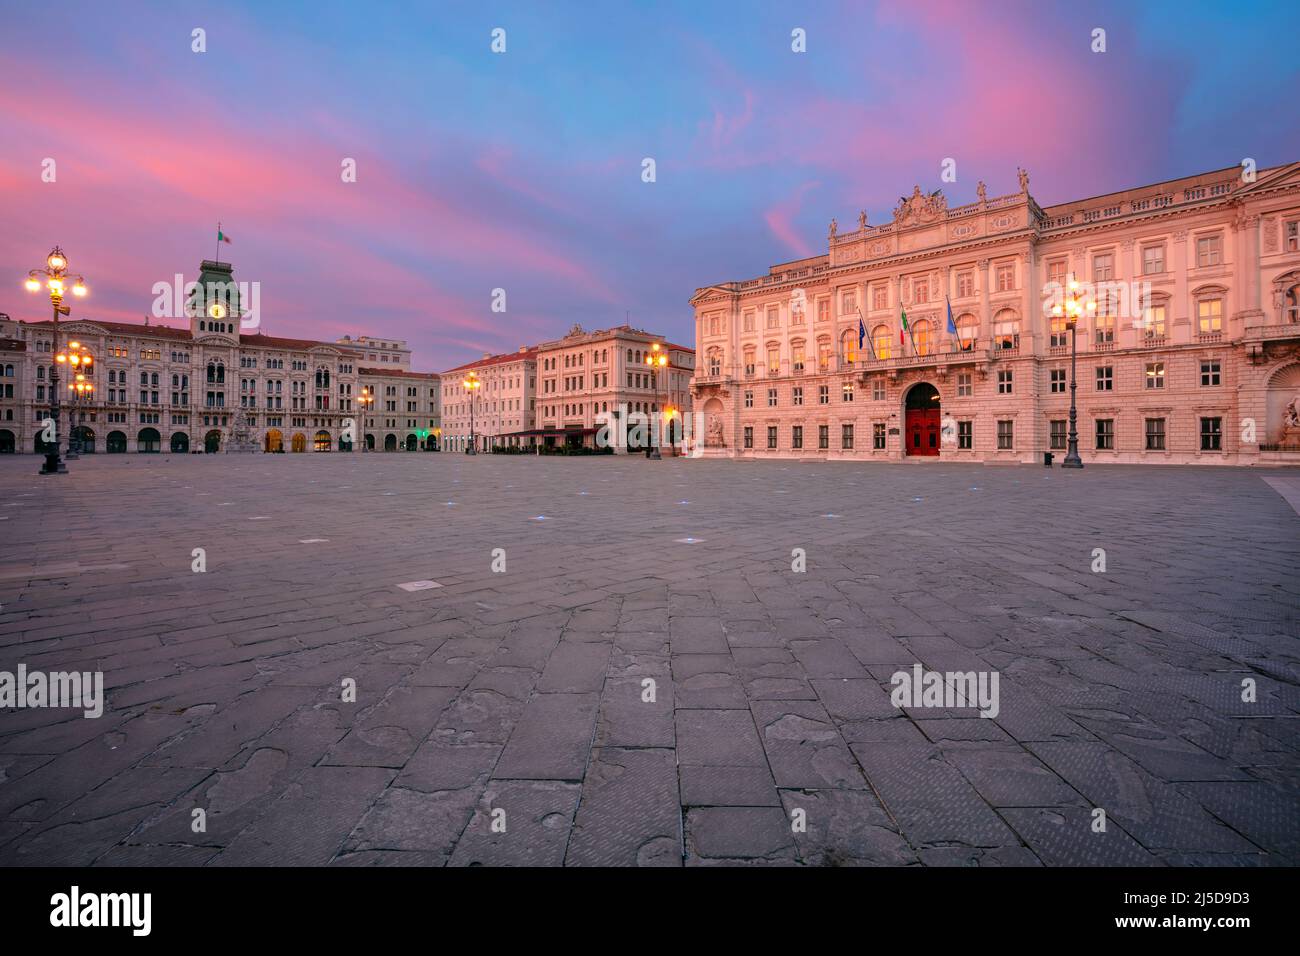 Trieste, Italia. Imagen del paisaje urbano del centro de Trieste, Italia, con la plaza principal al amanecer. Foto de stock